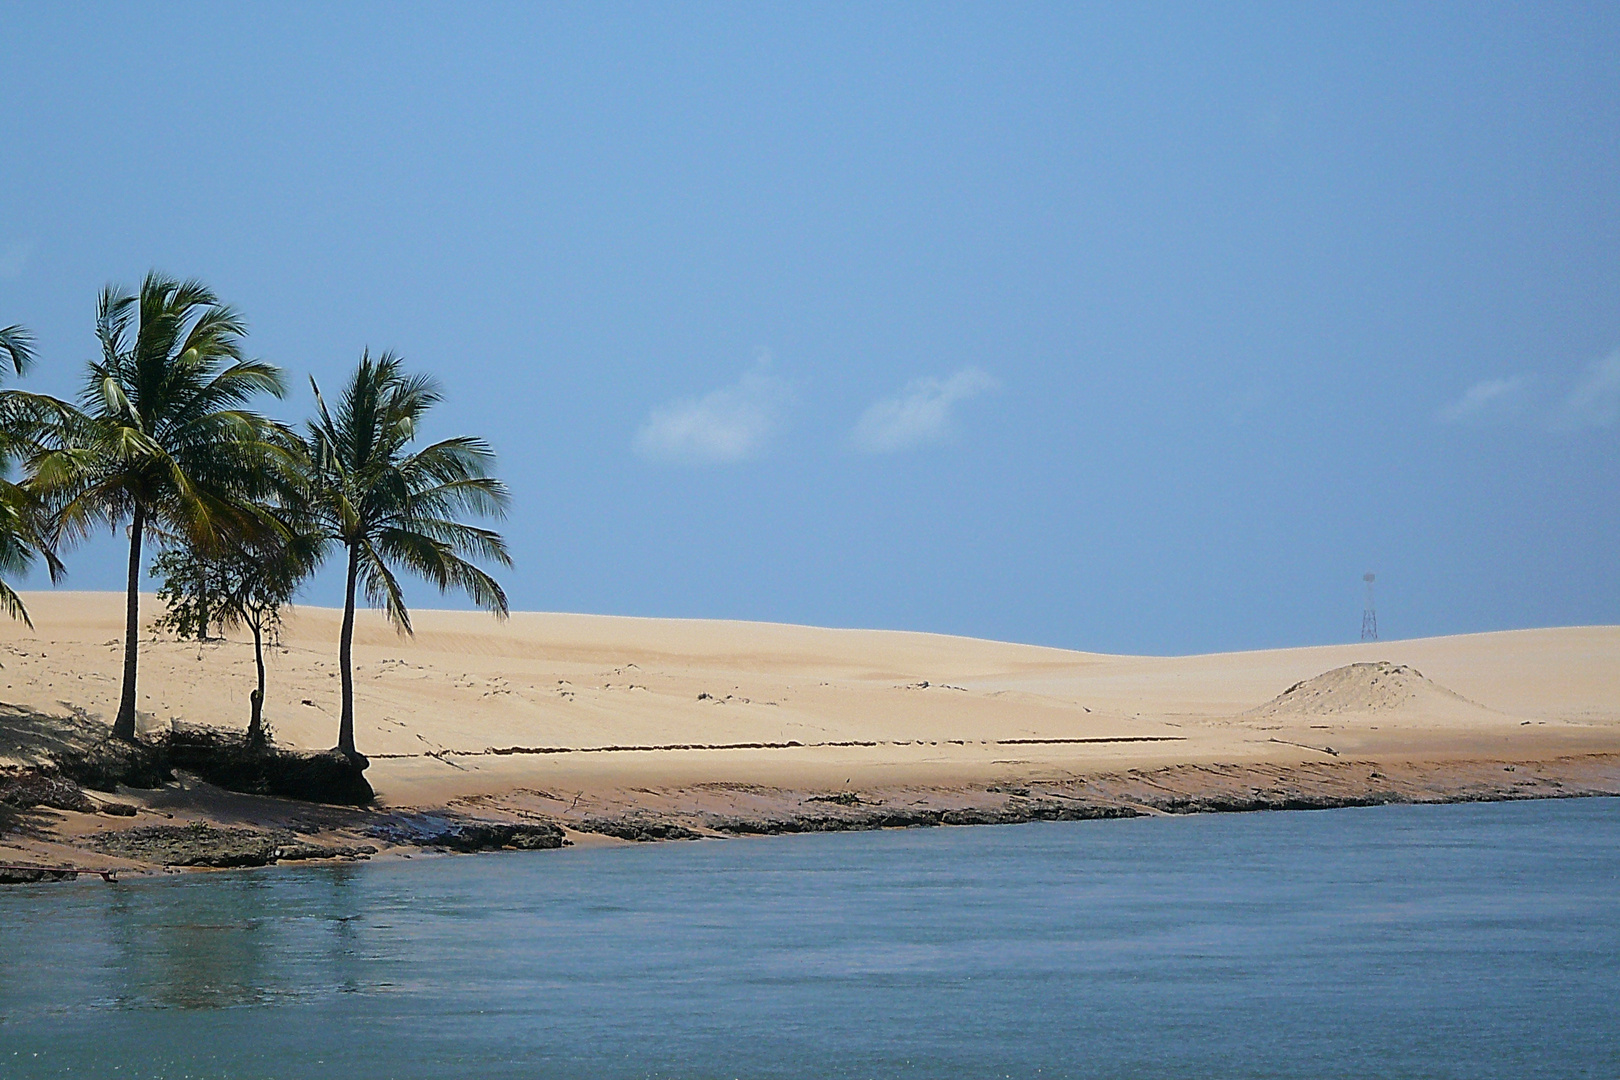 Riverside - Palm trees & dunes